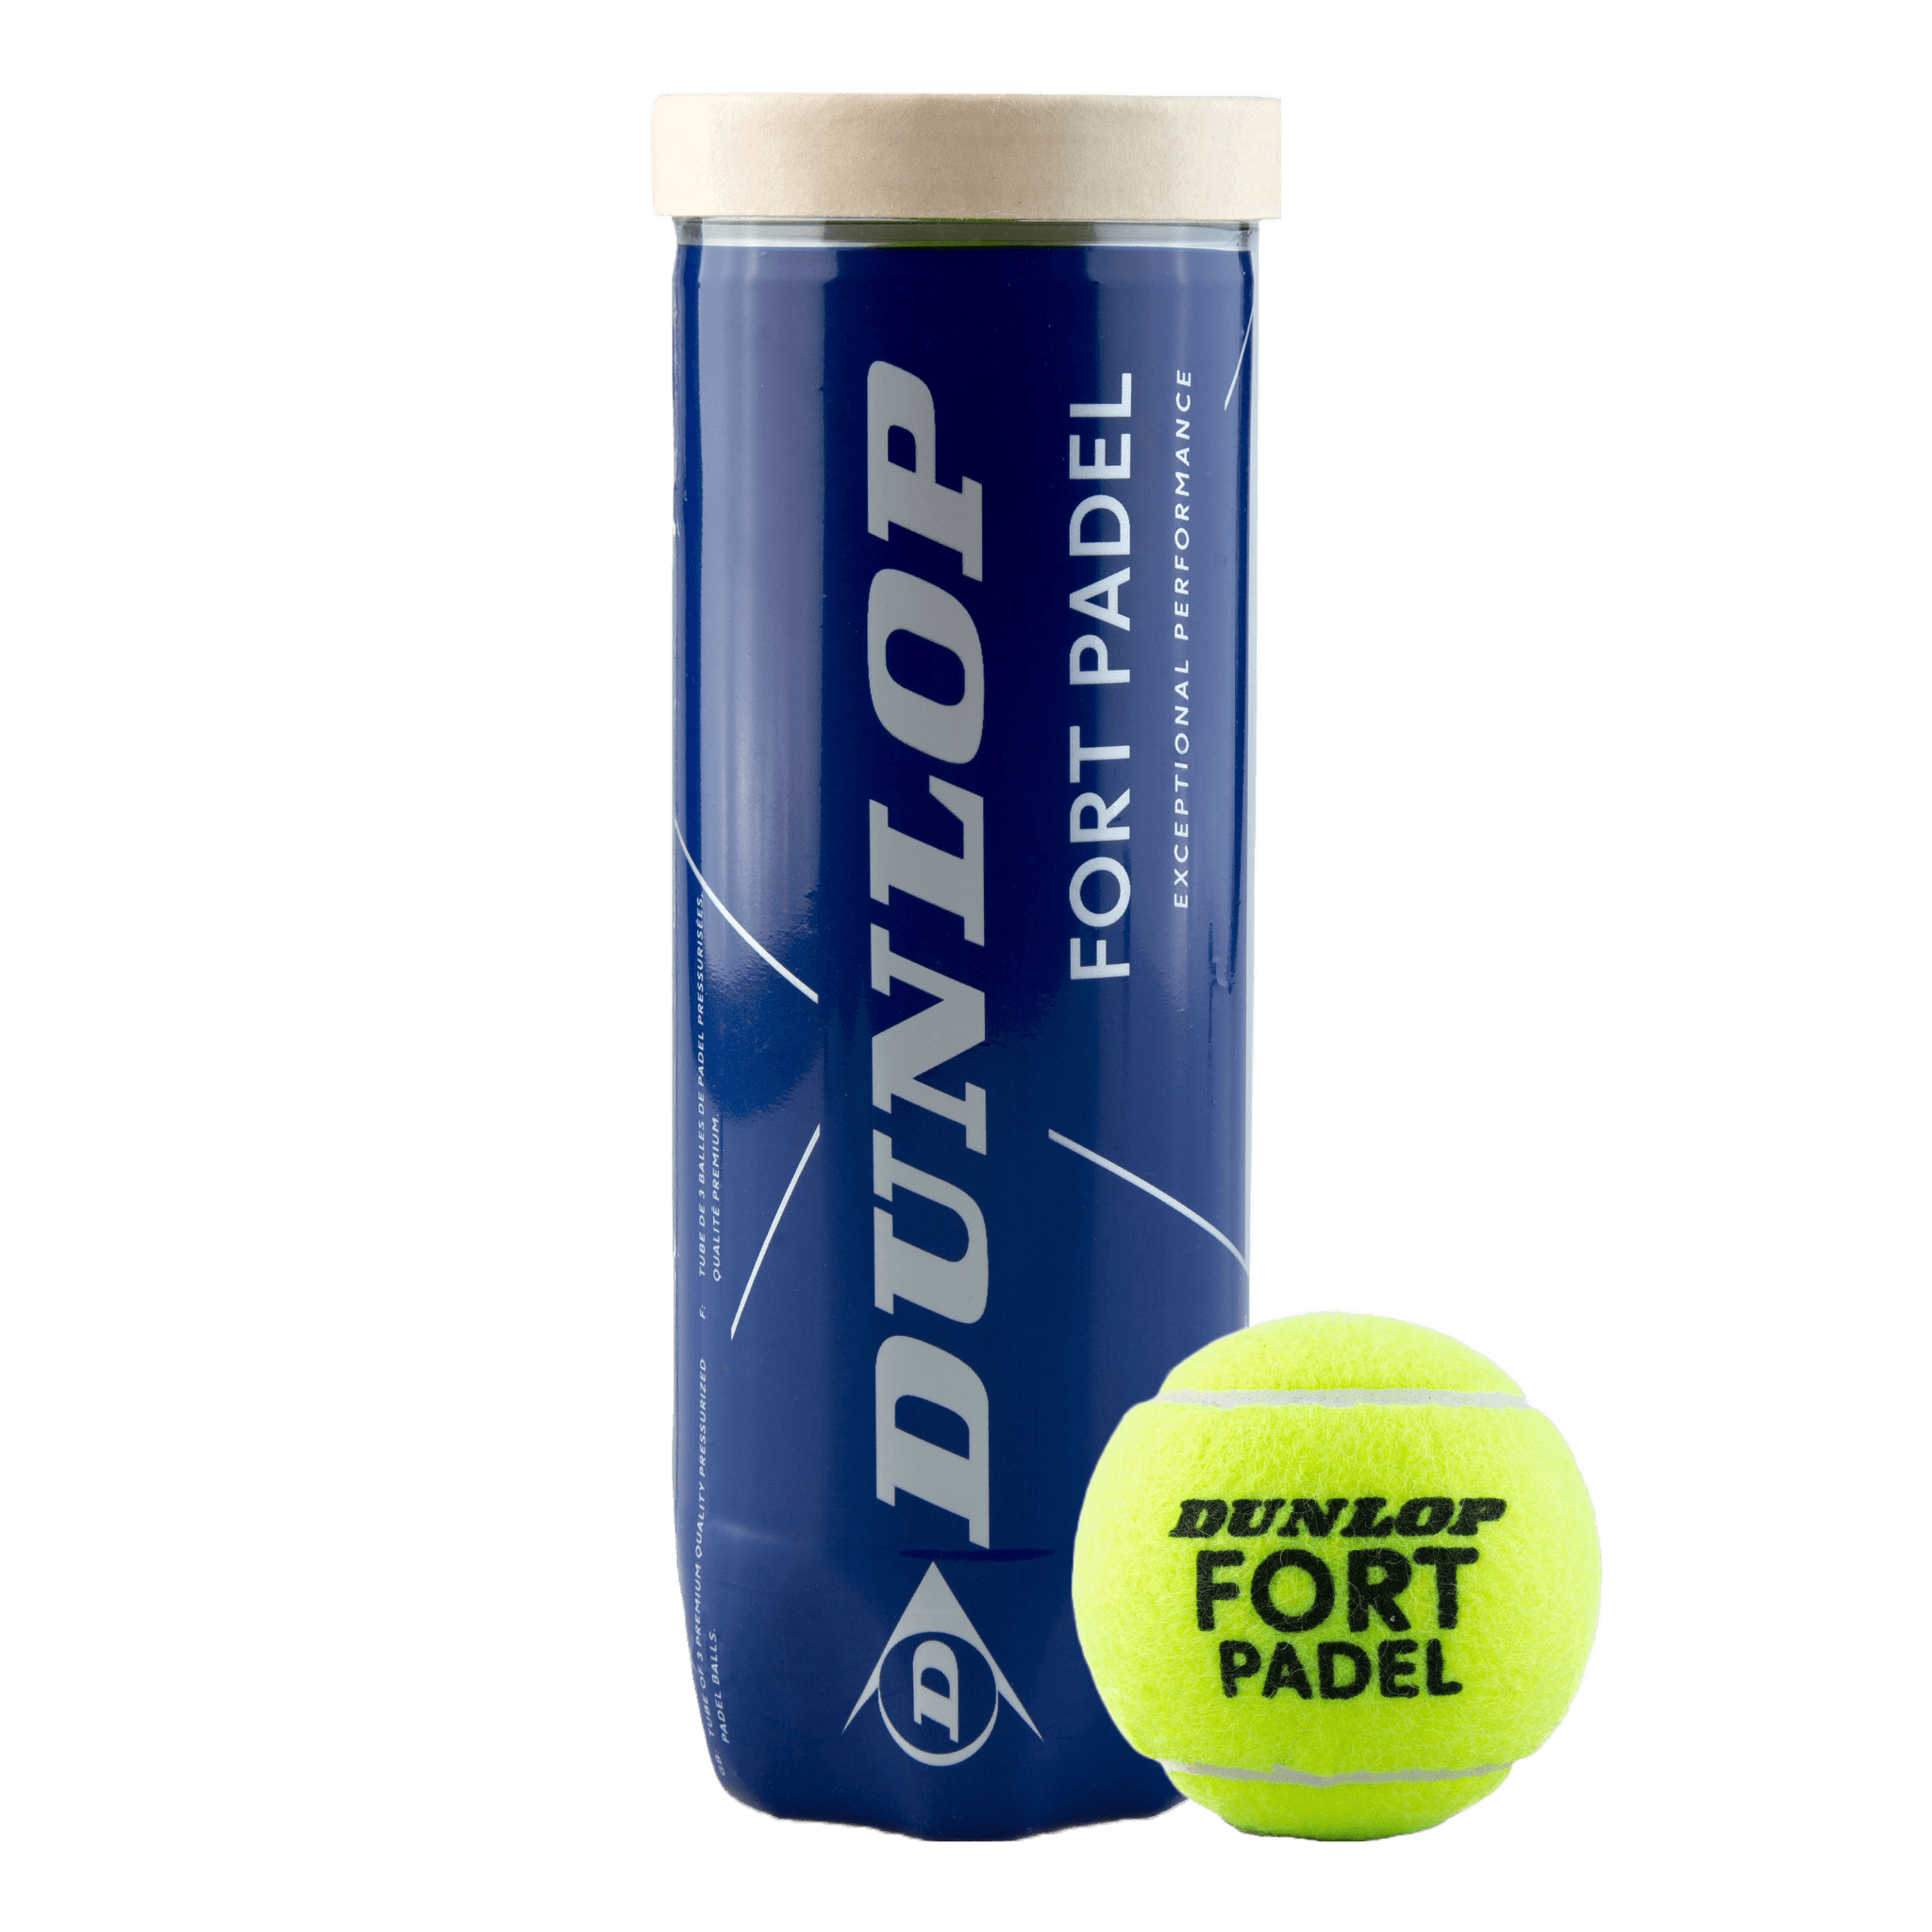 Dunlop Fort Padel padelballen - PadelAmigos